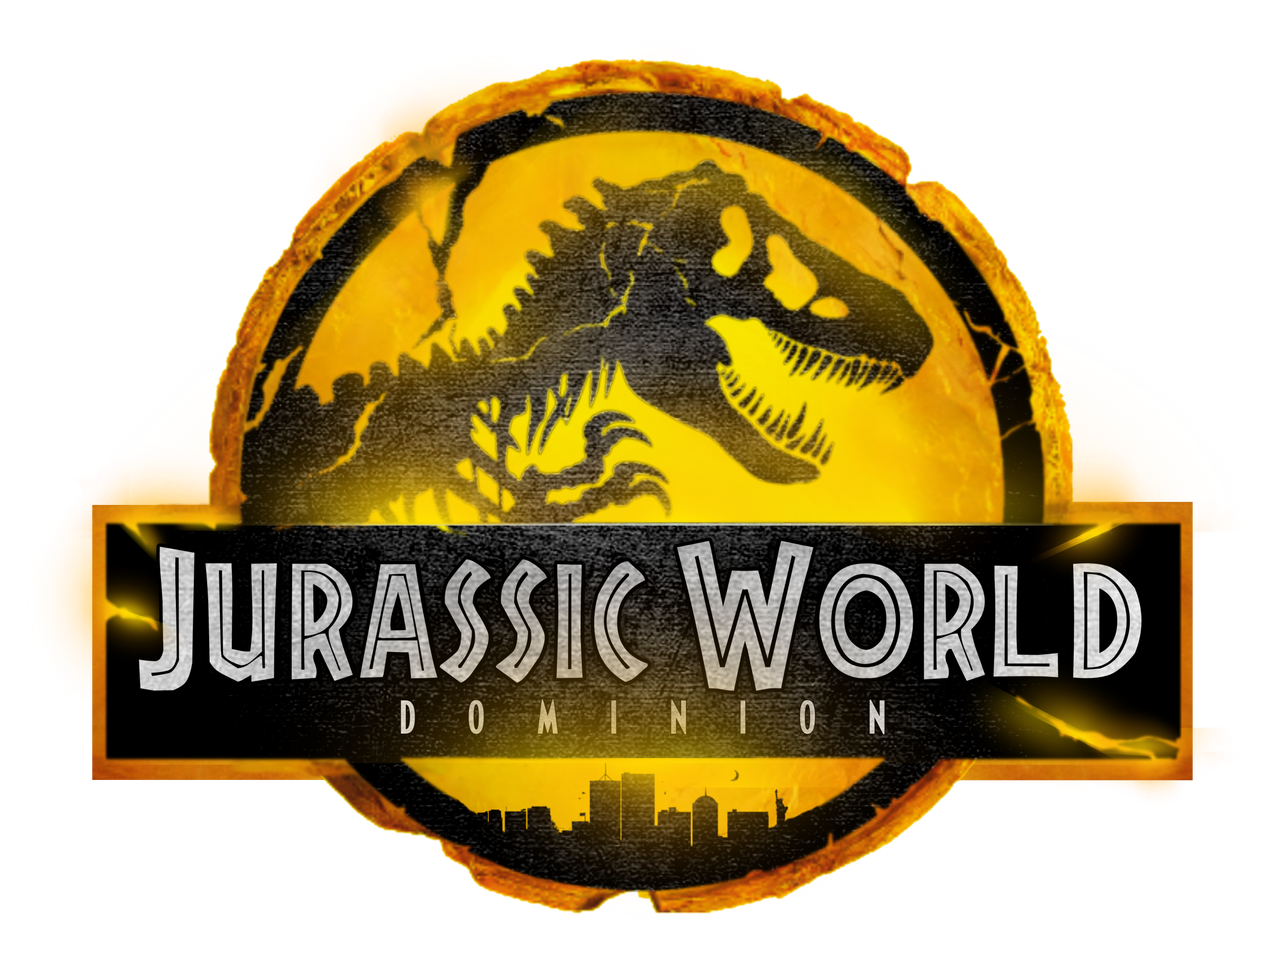 jurassic-world-dominion-logo-latest-memes-imgflip